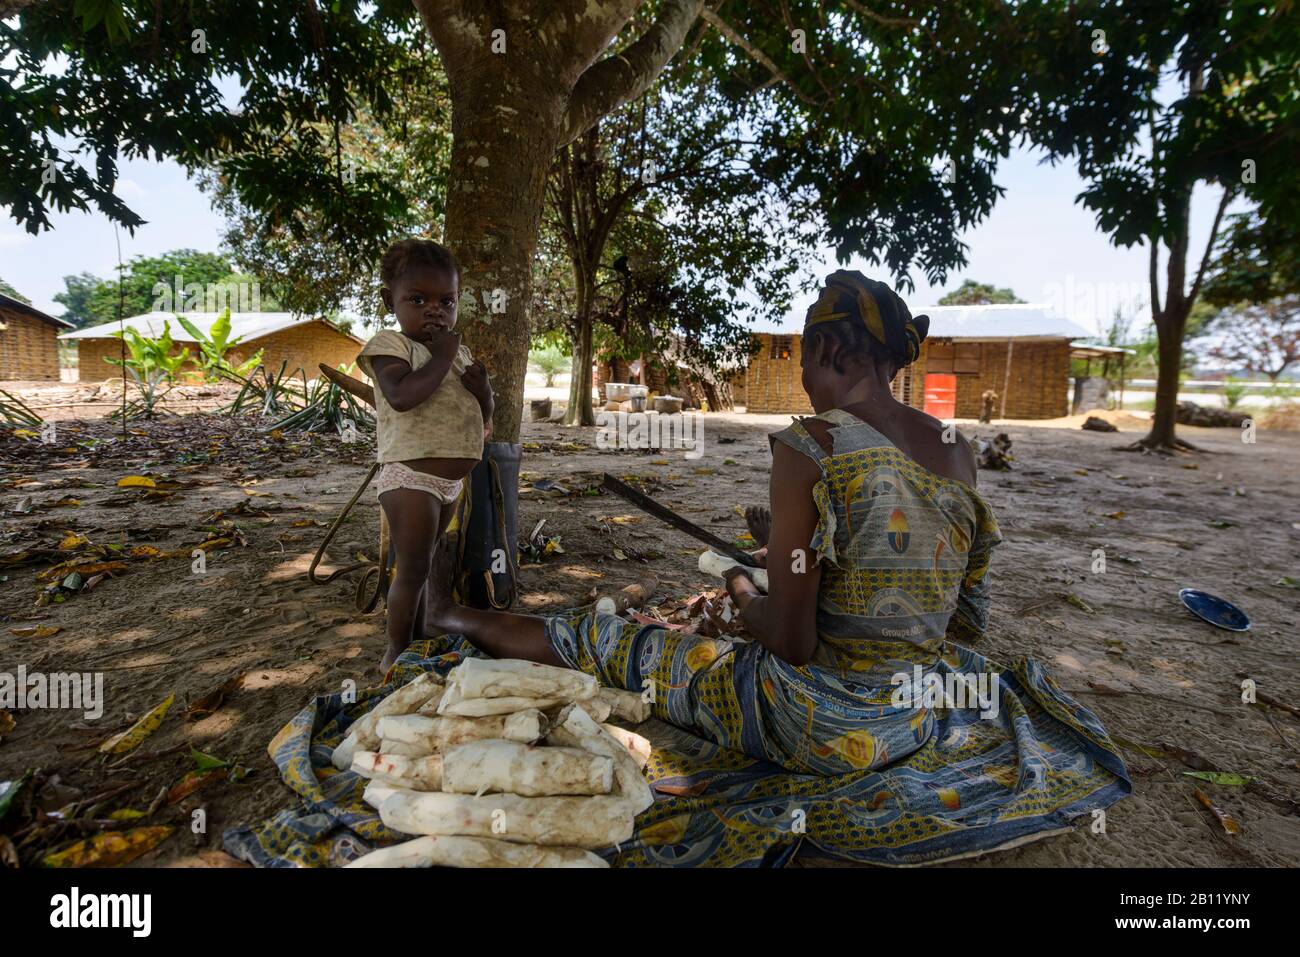 Woman preparing food, Democratic Republic of the Congo, Africa Stock Photo